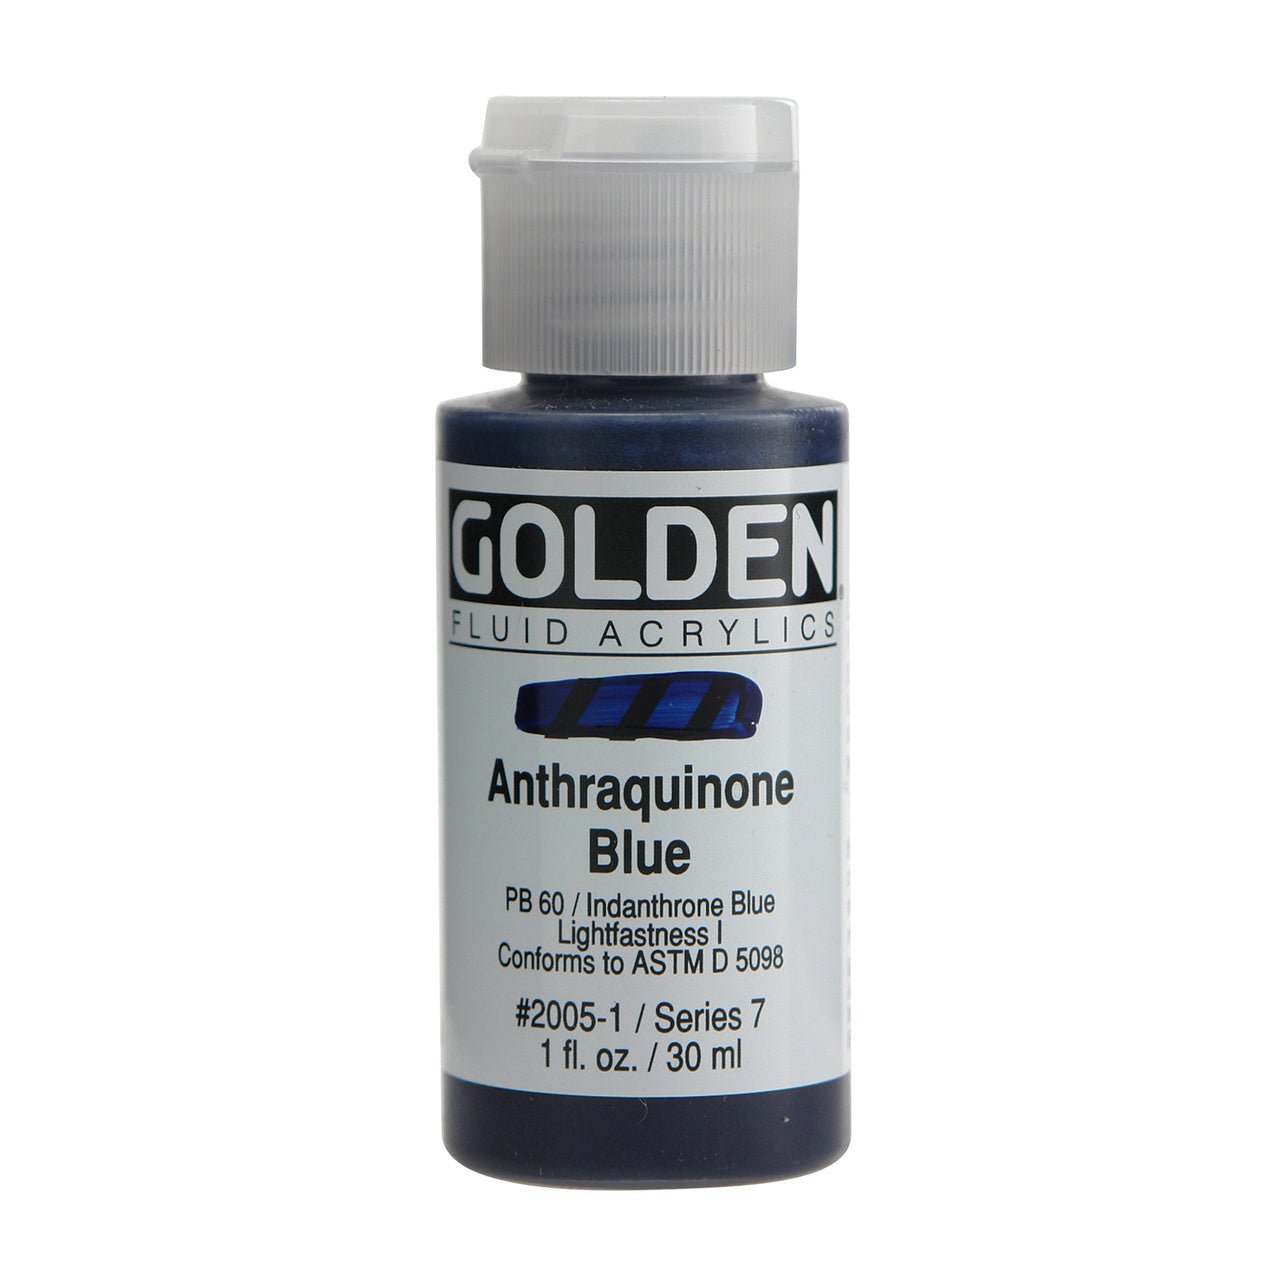 Golden Fluid Acrylic Anthraquinone Blue 1 oz - merriartist.com